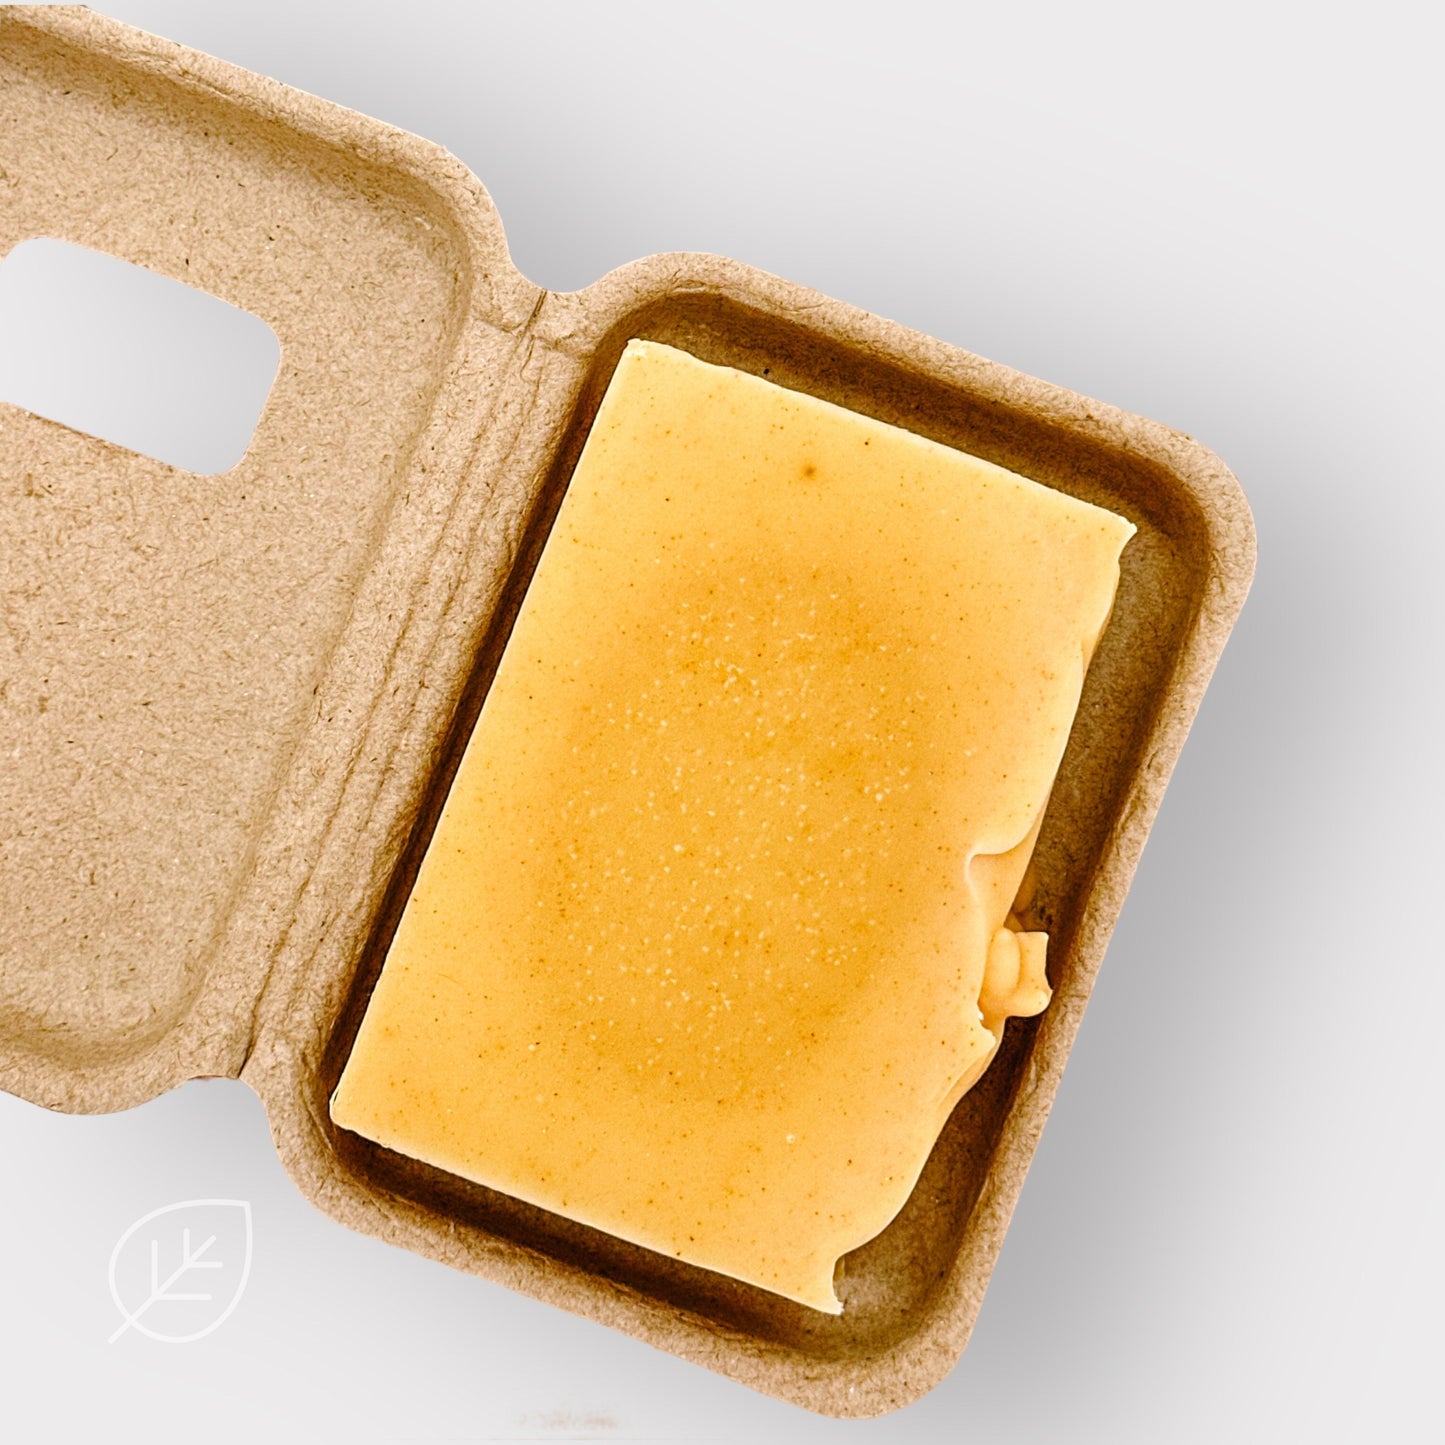 Bliss Bar Soap - Bergamot, Orange & Lemon w/ Brazilian Gold Clay